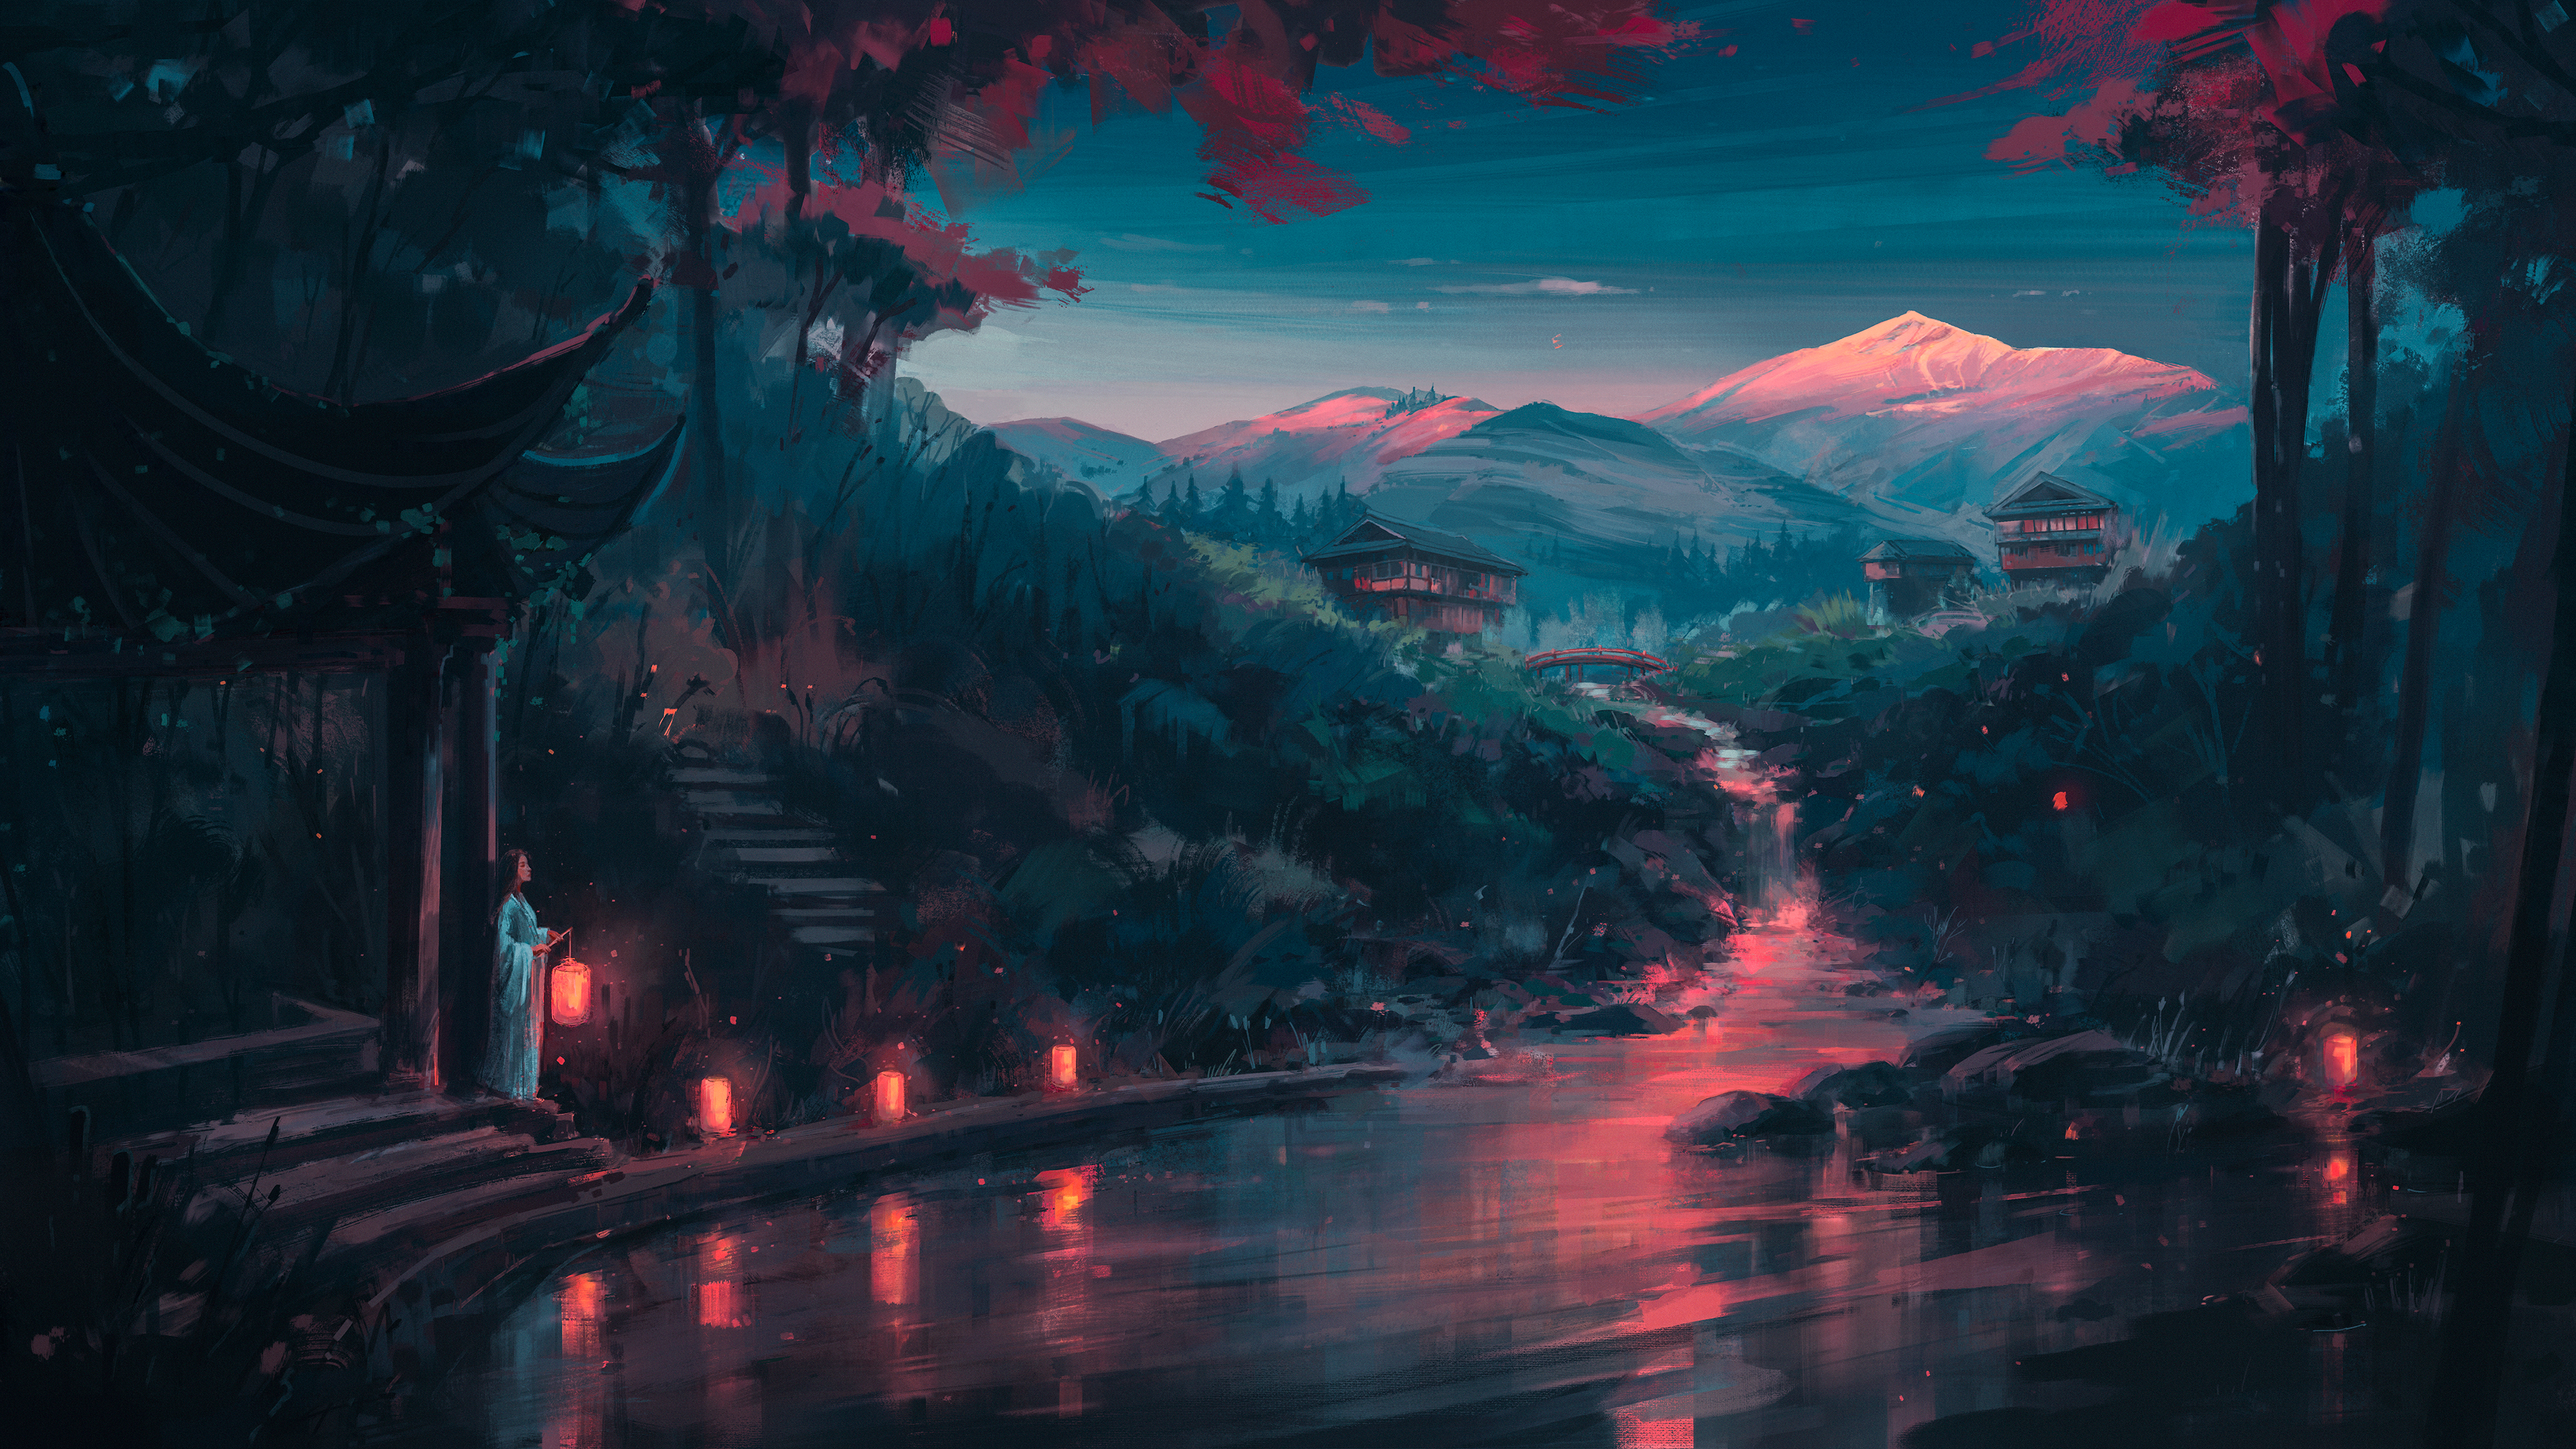 General 3840x2160 Aenami digital art artwork illustration painting landscape nature mountains reflection forest trees torii bridge water lantern